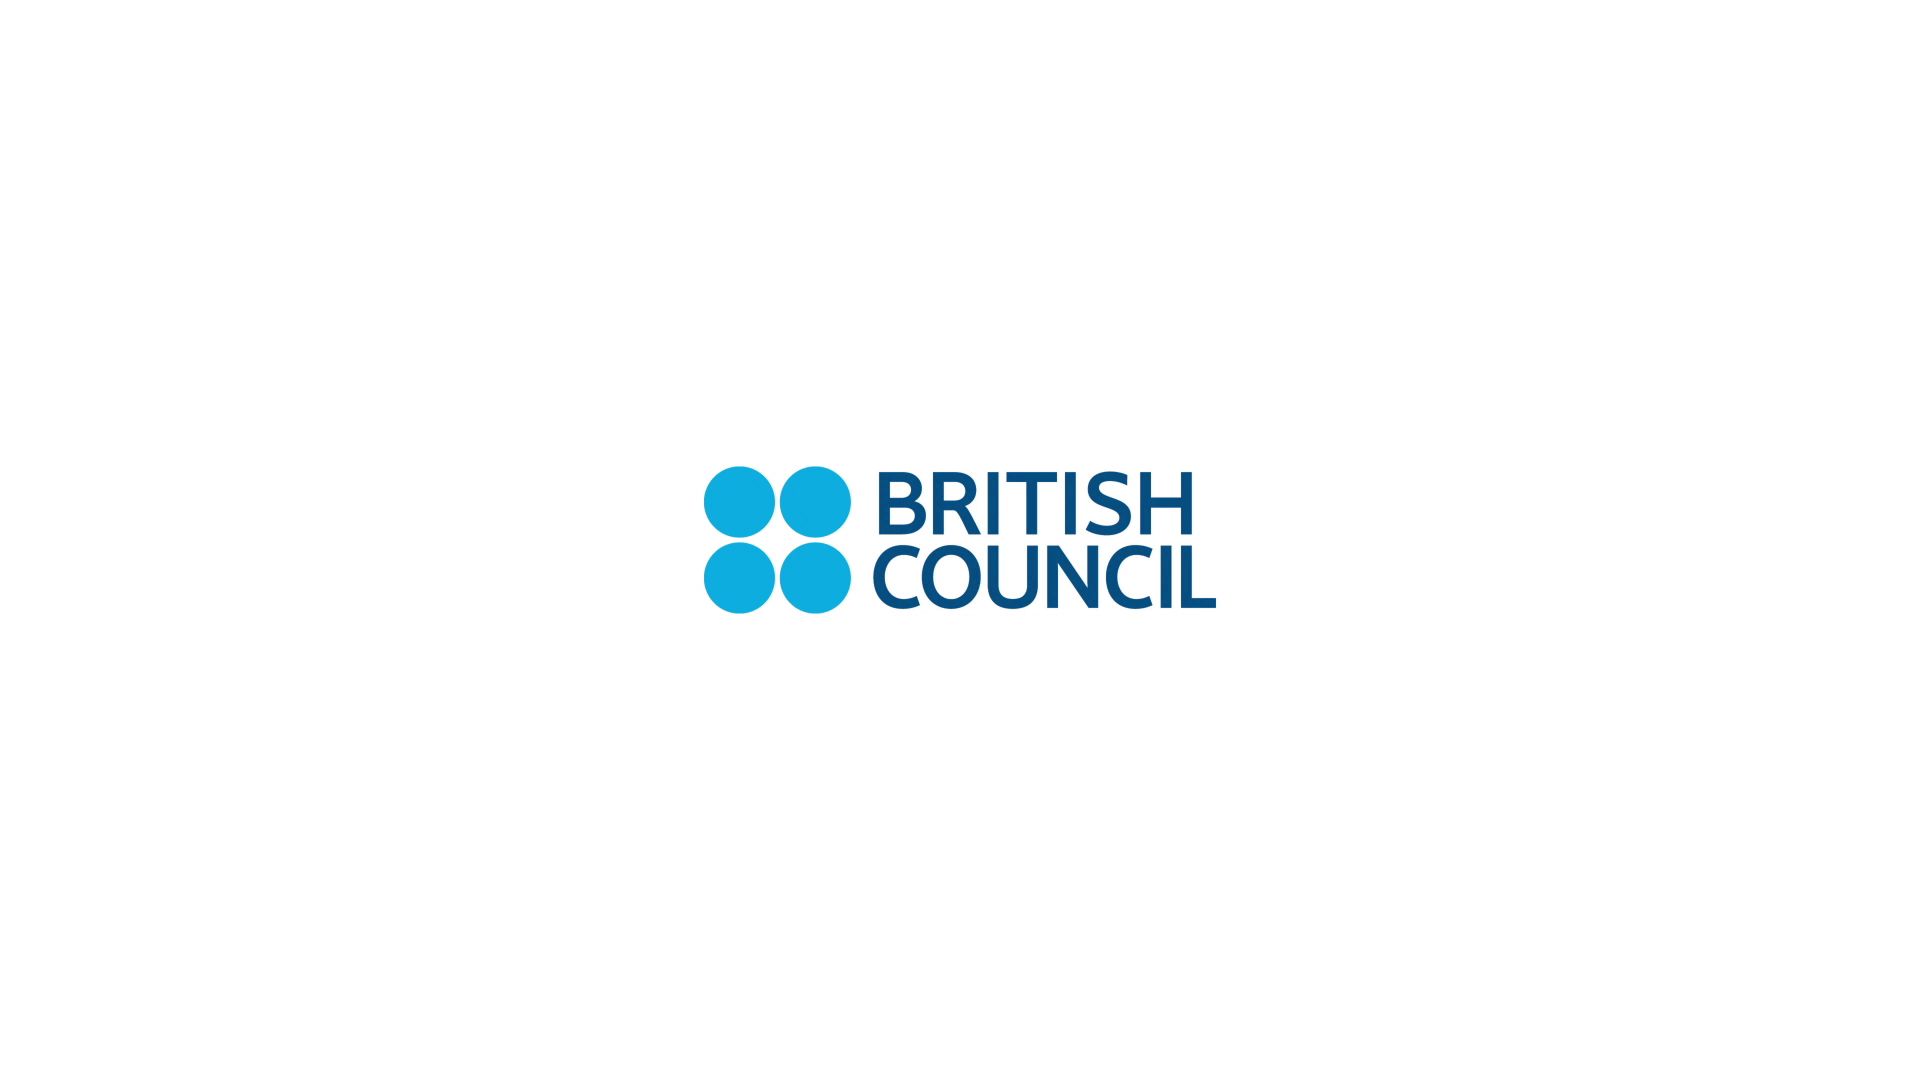 Https learnenglishteens britishcouncil org skills. British Council. British Council логотип. Британский совет. Британский совет лого.